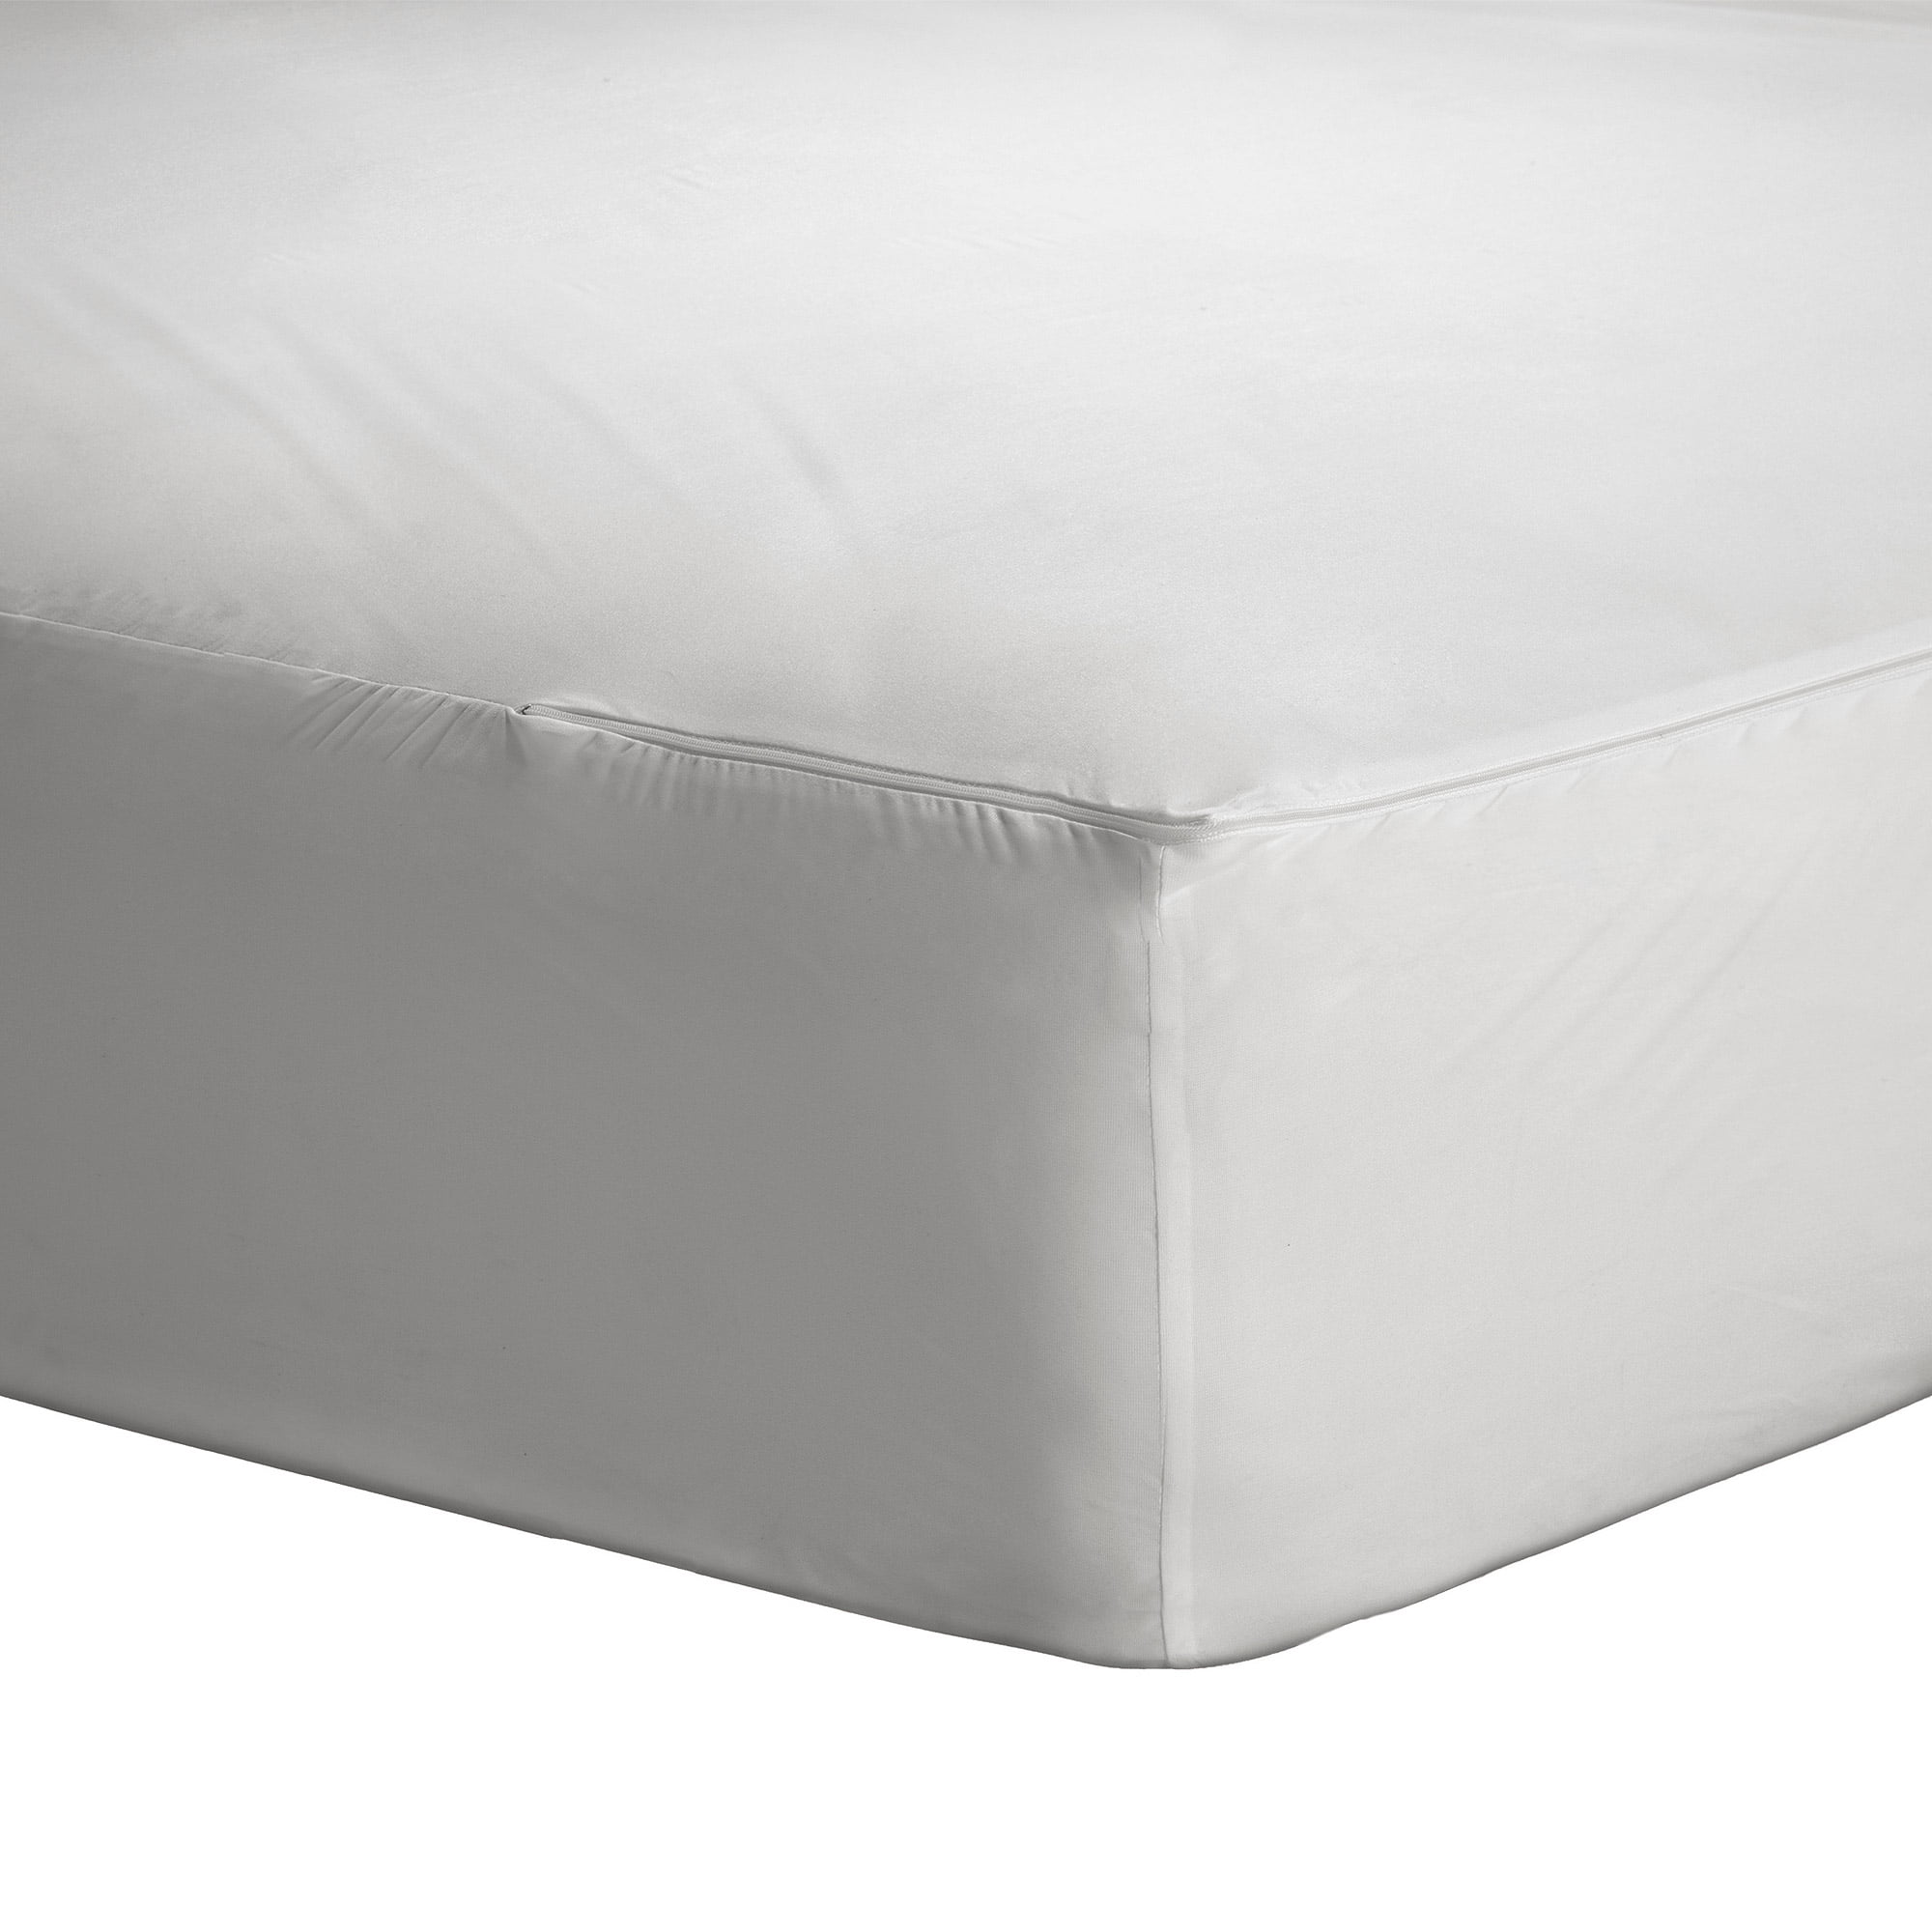 Terry Mattress Protector Walmart inside home design waterproof mattress pad pertaining to Household